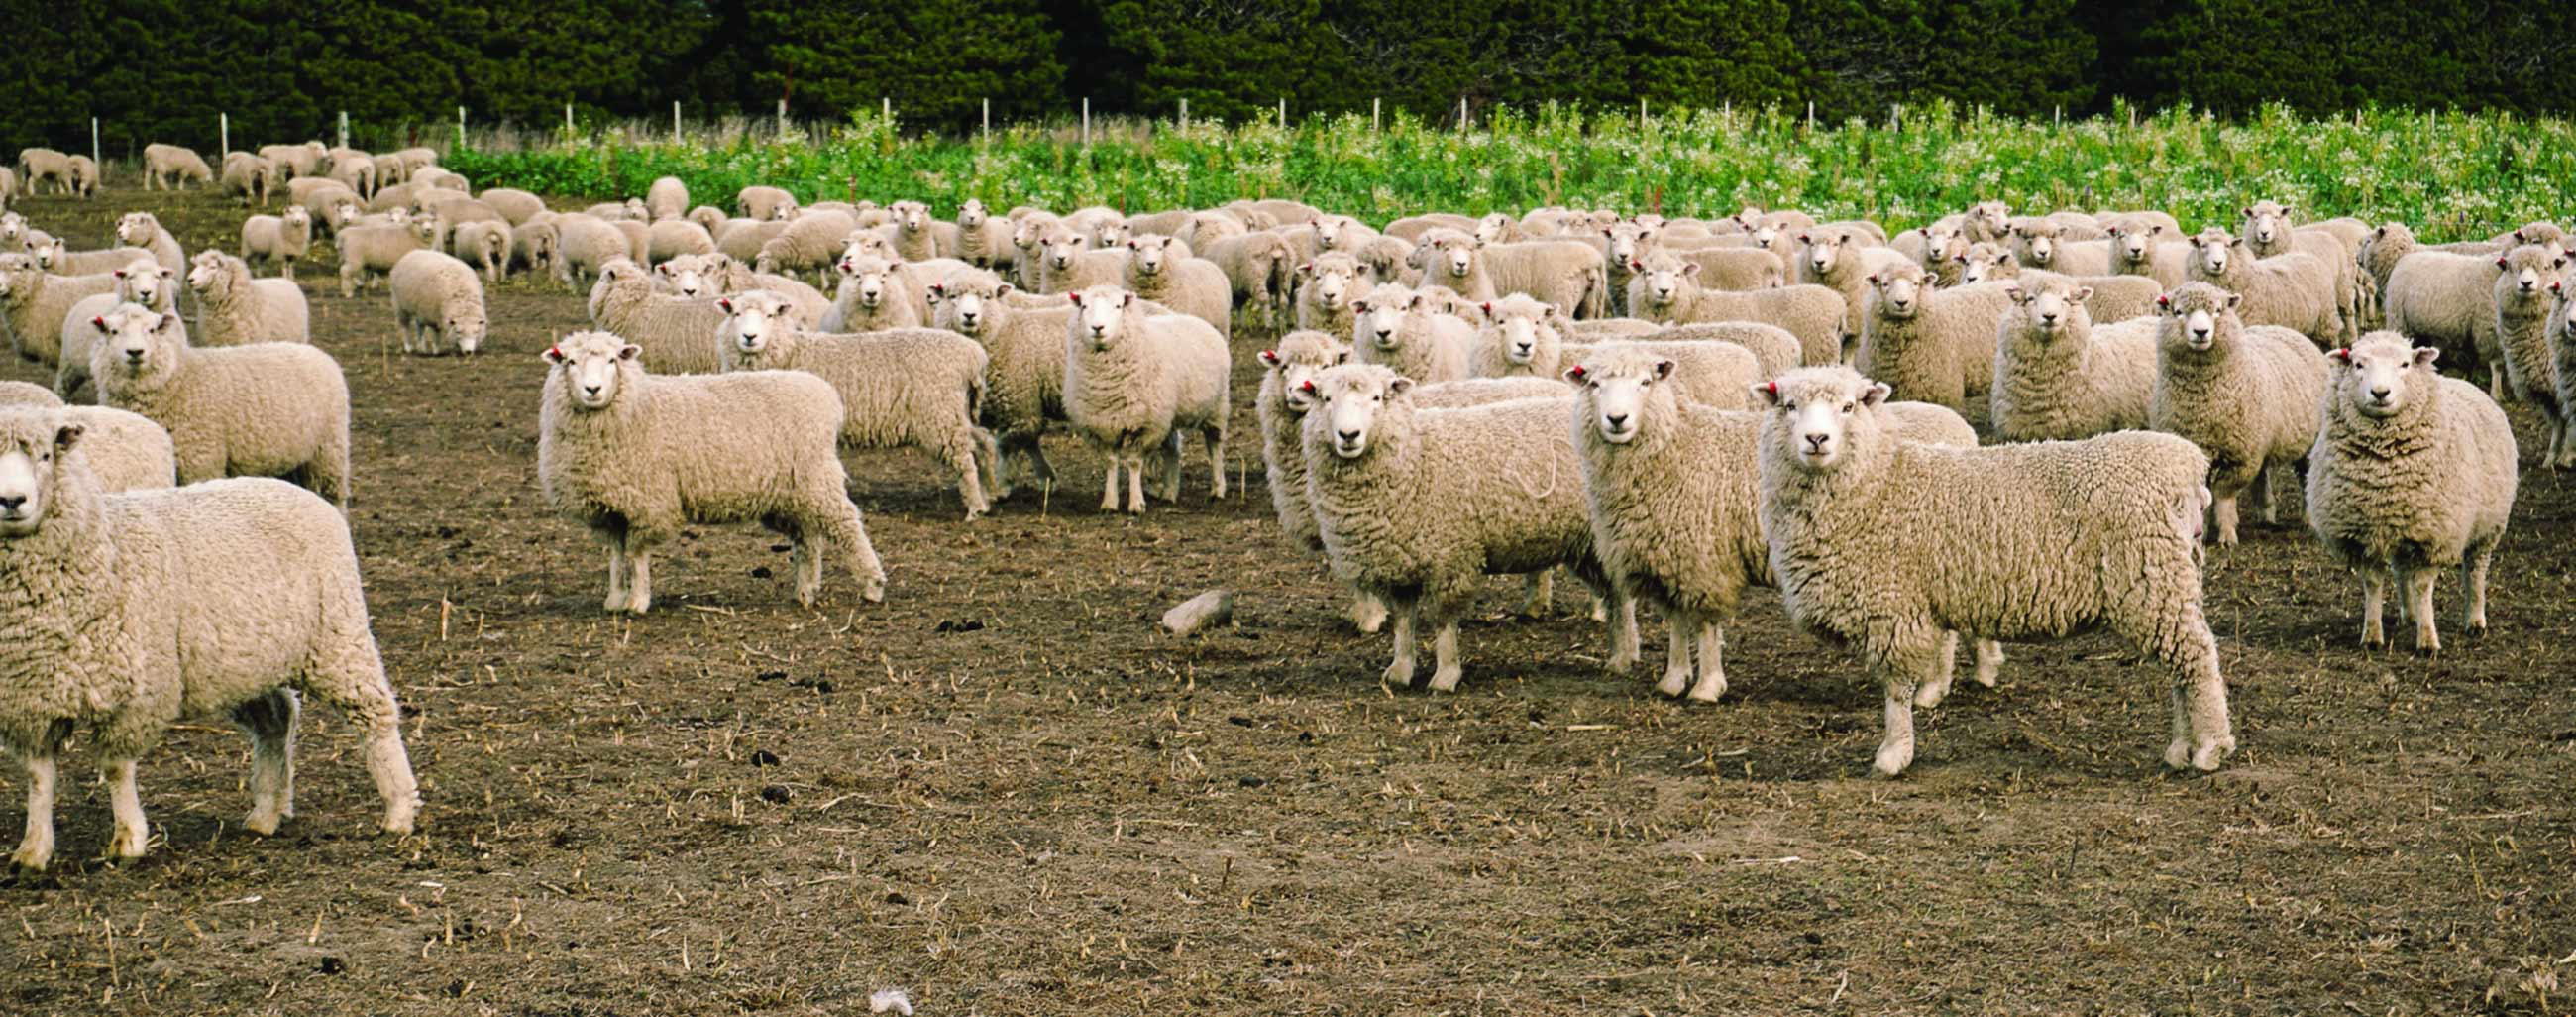 flock of sheep on farm